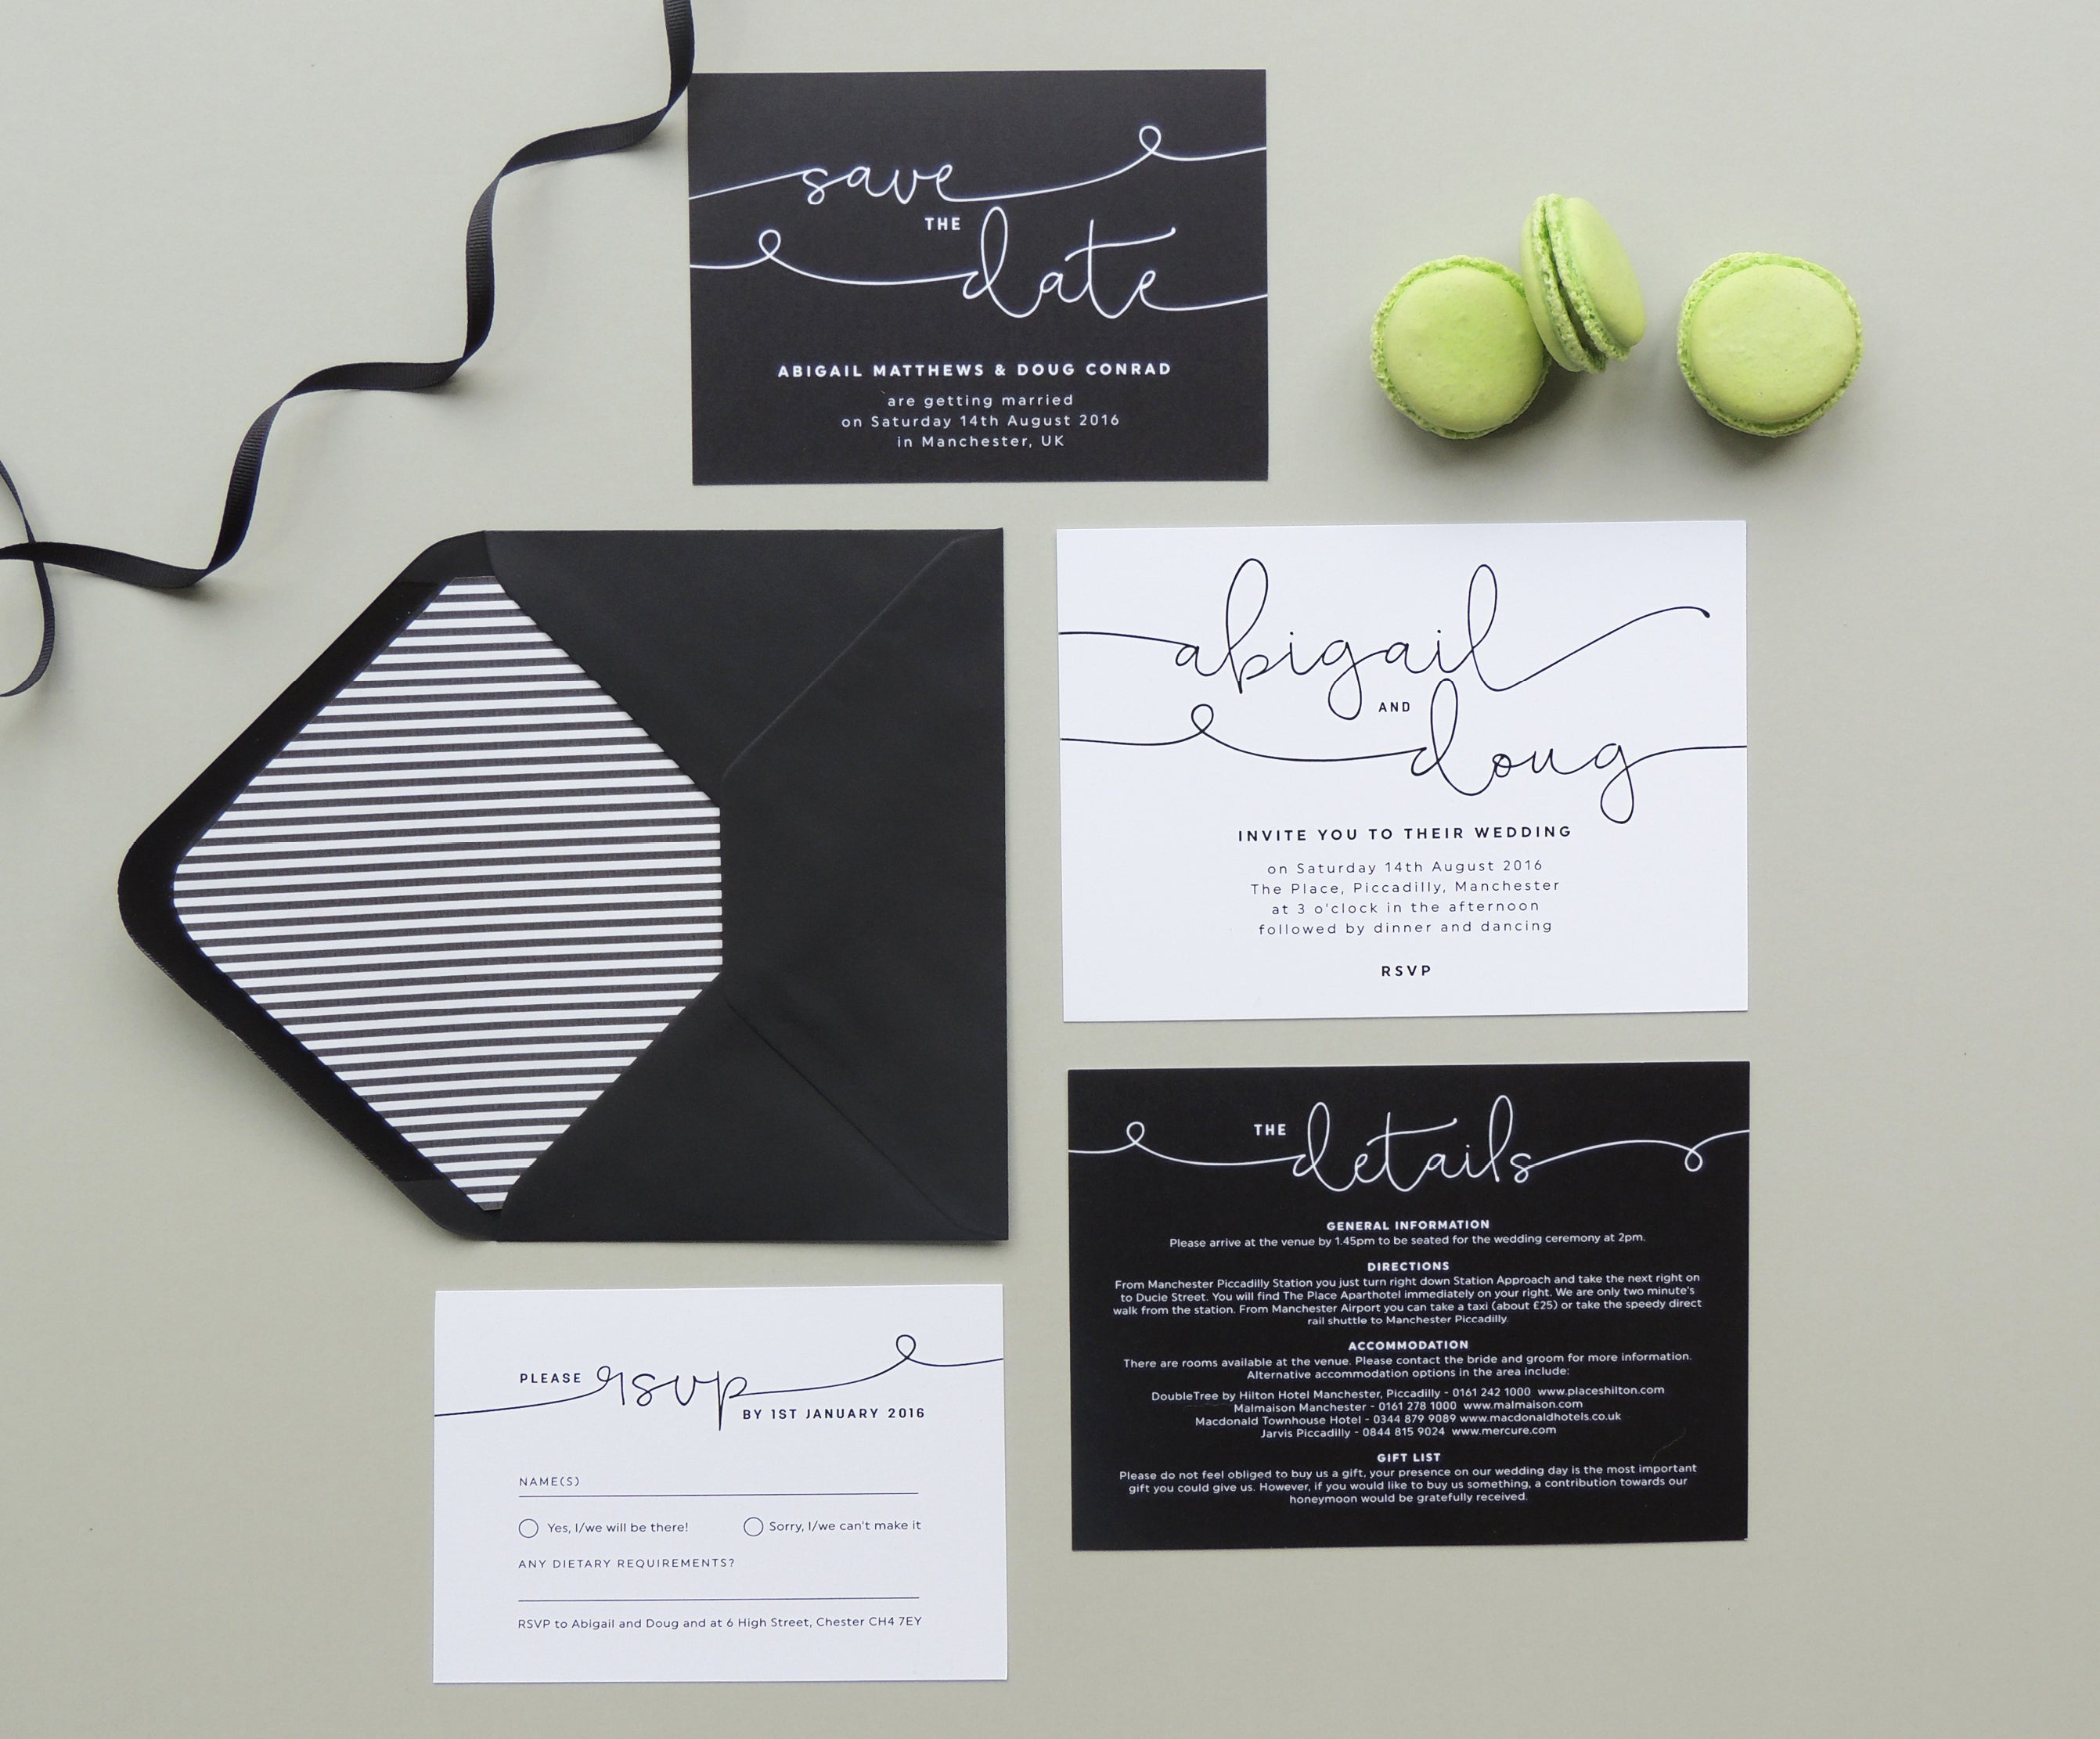 Project Pretty Kate wedding invitations